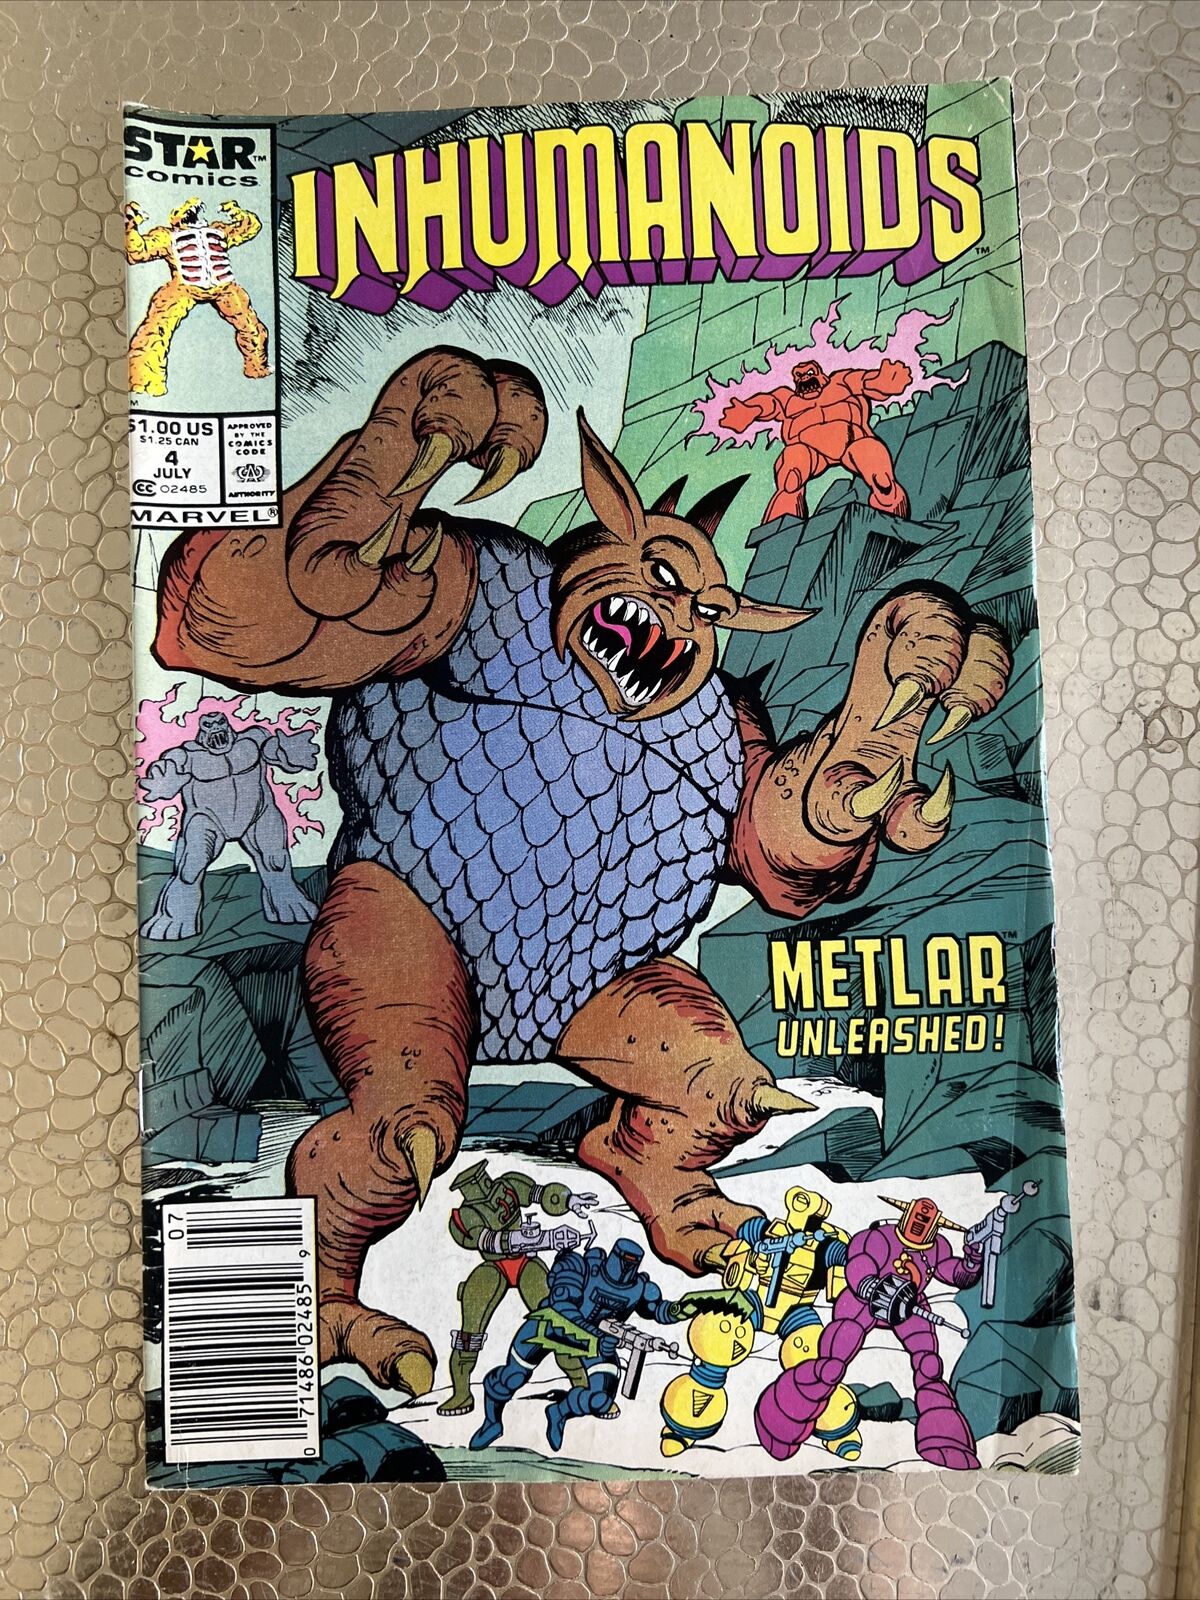 The Inhumanoids #1 (Marvel Comics January 1987)